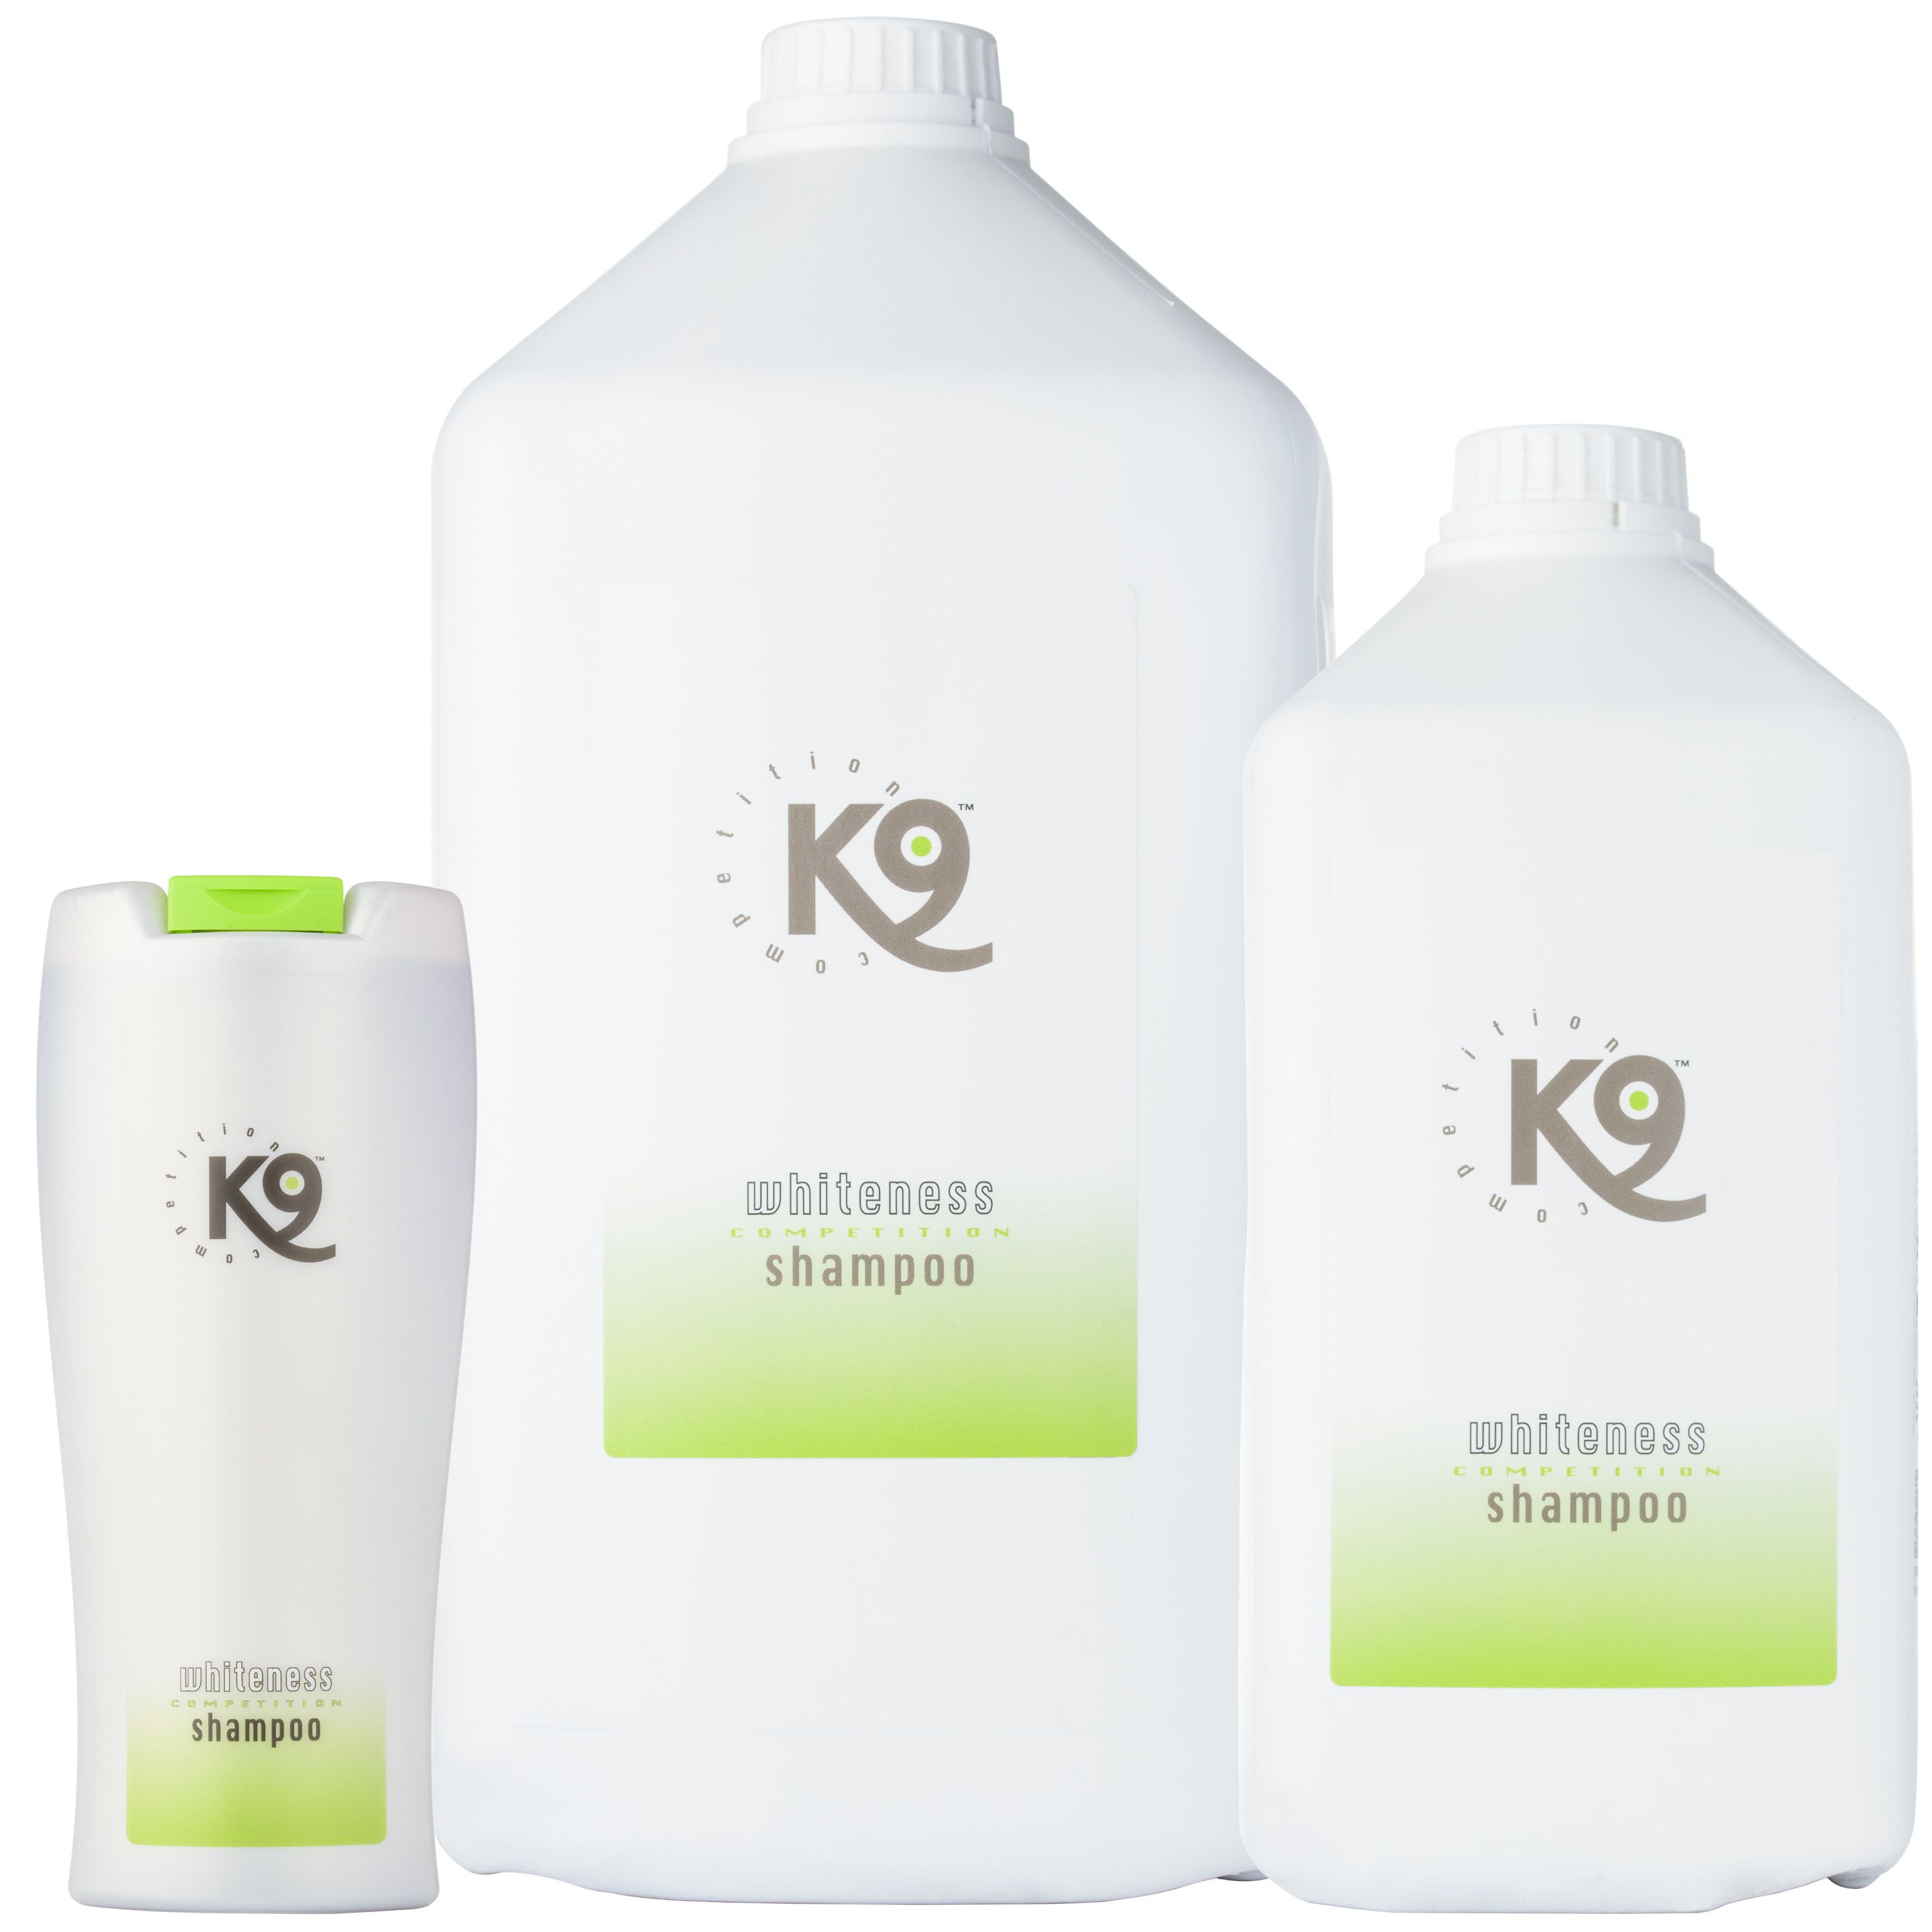 szampon k9 whiteness